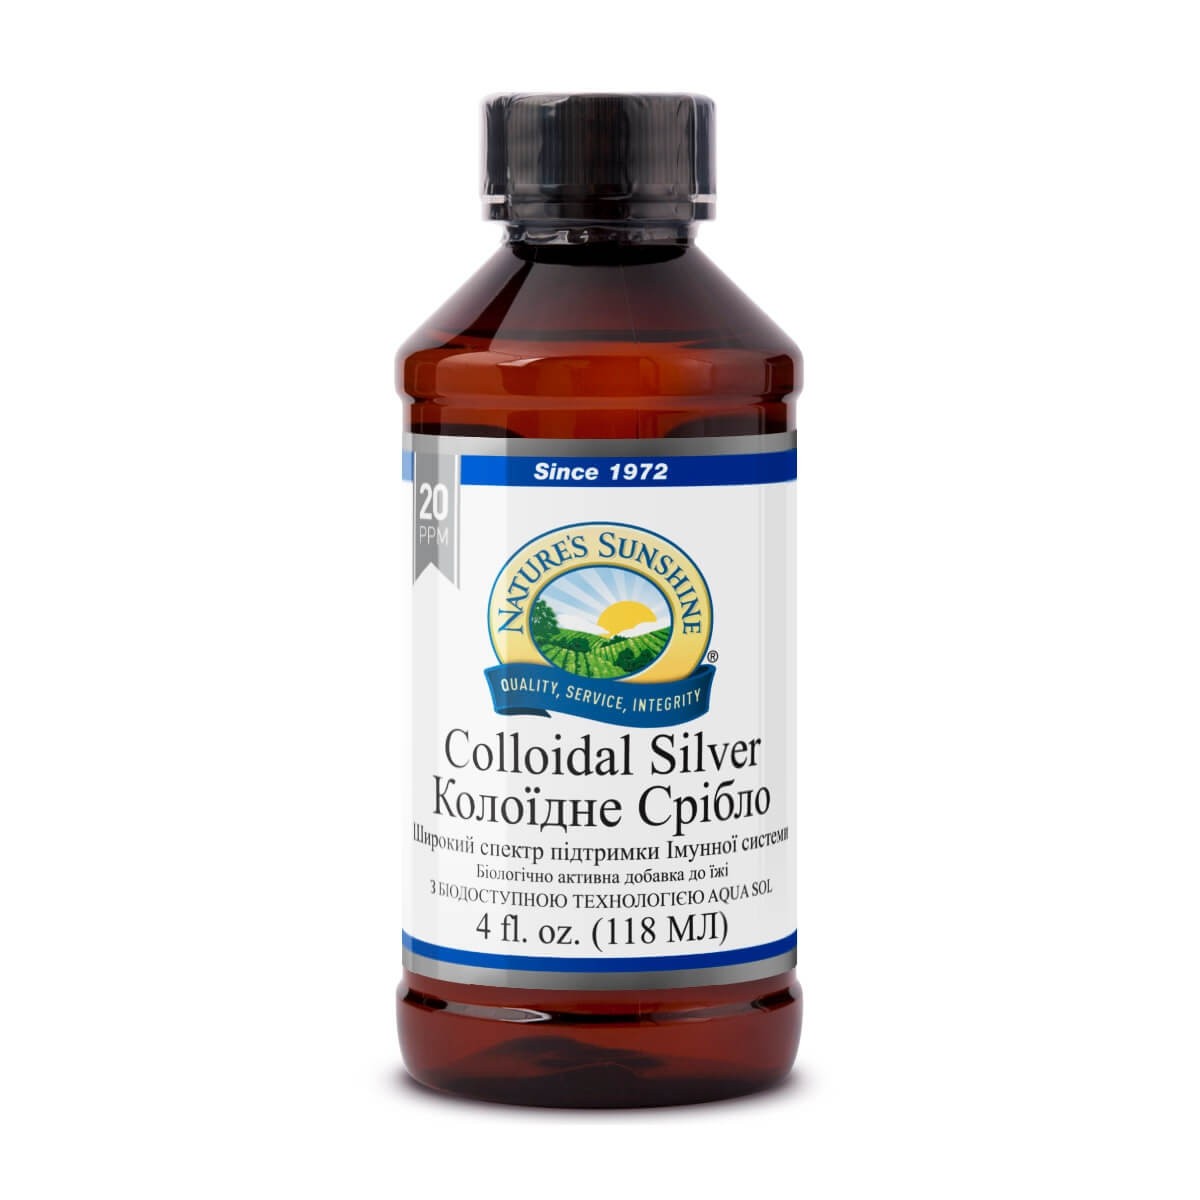 Colloidal Silver - Коллоидный раствор серебра - БАД Nature's Sunshine Products (NSP)